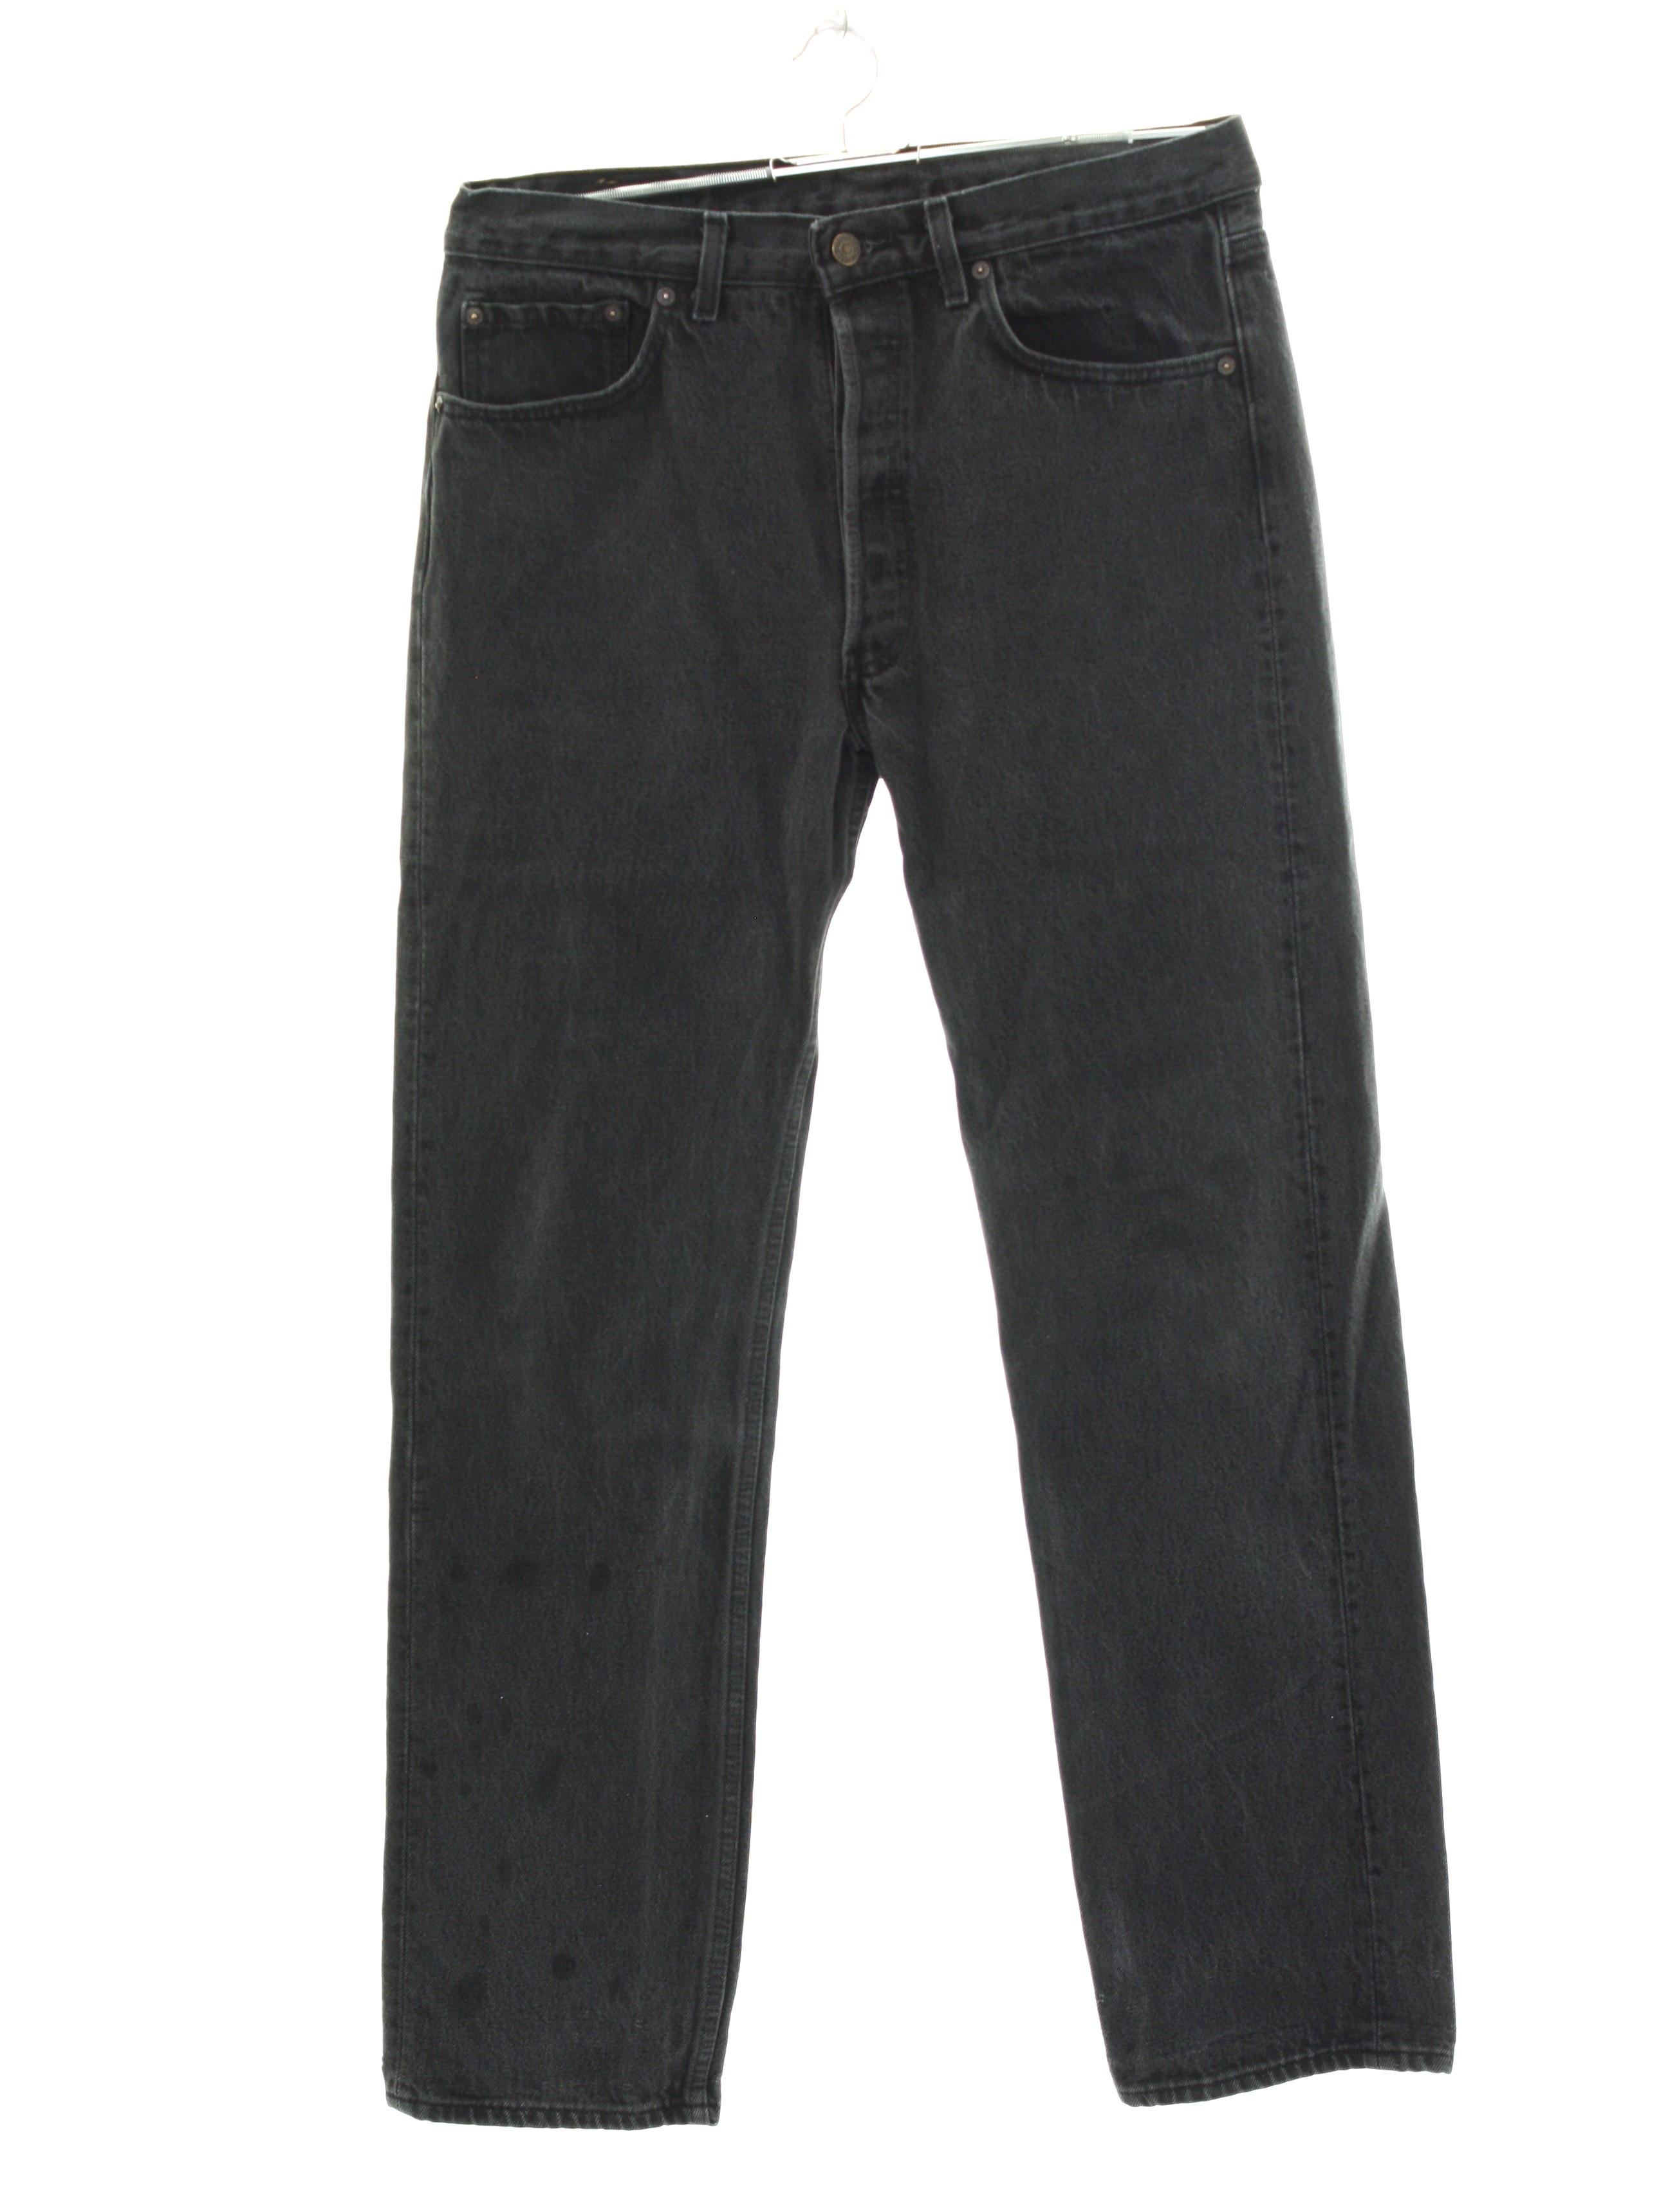 Eighties Vintage Pants: 80s -Levis 501s- Mens black cotton denim ...